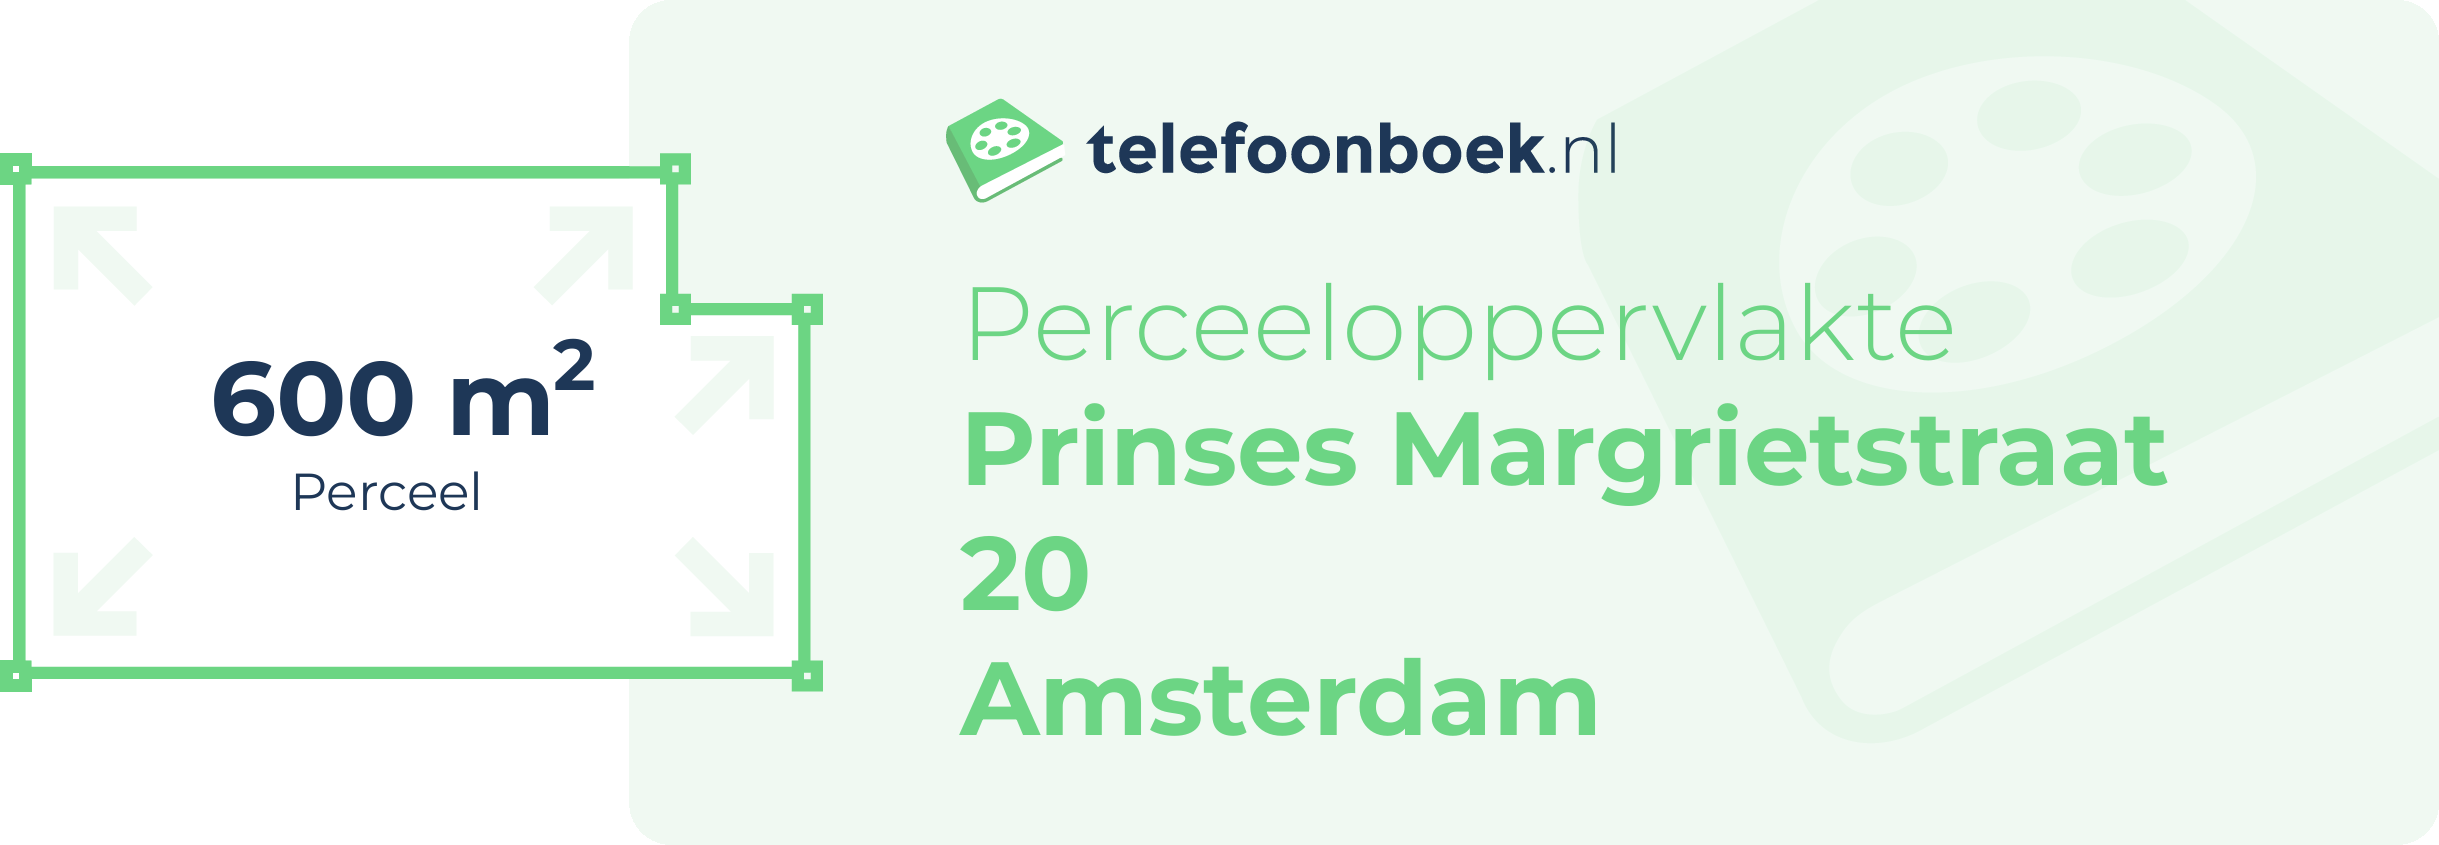 Perceeloppervlakte Prinses Margrietstraat 20 Amsterdam